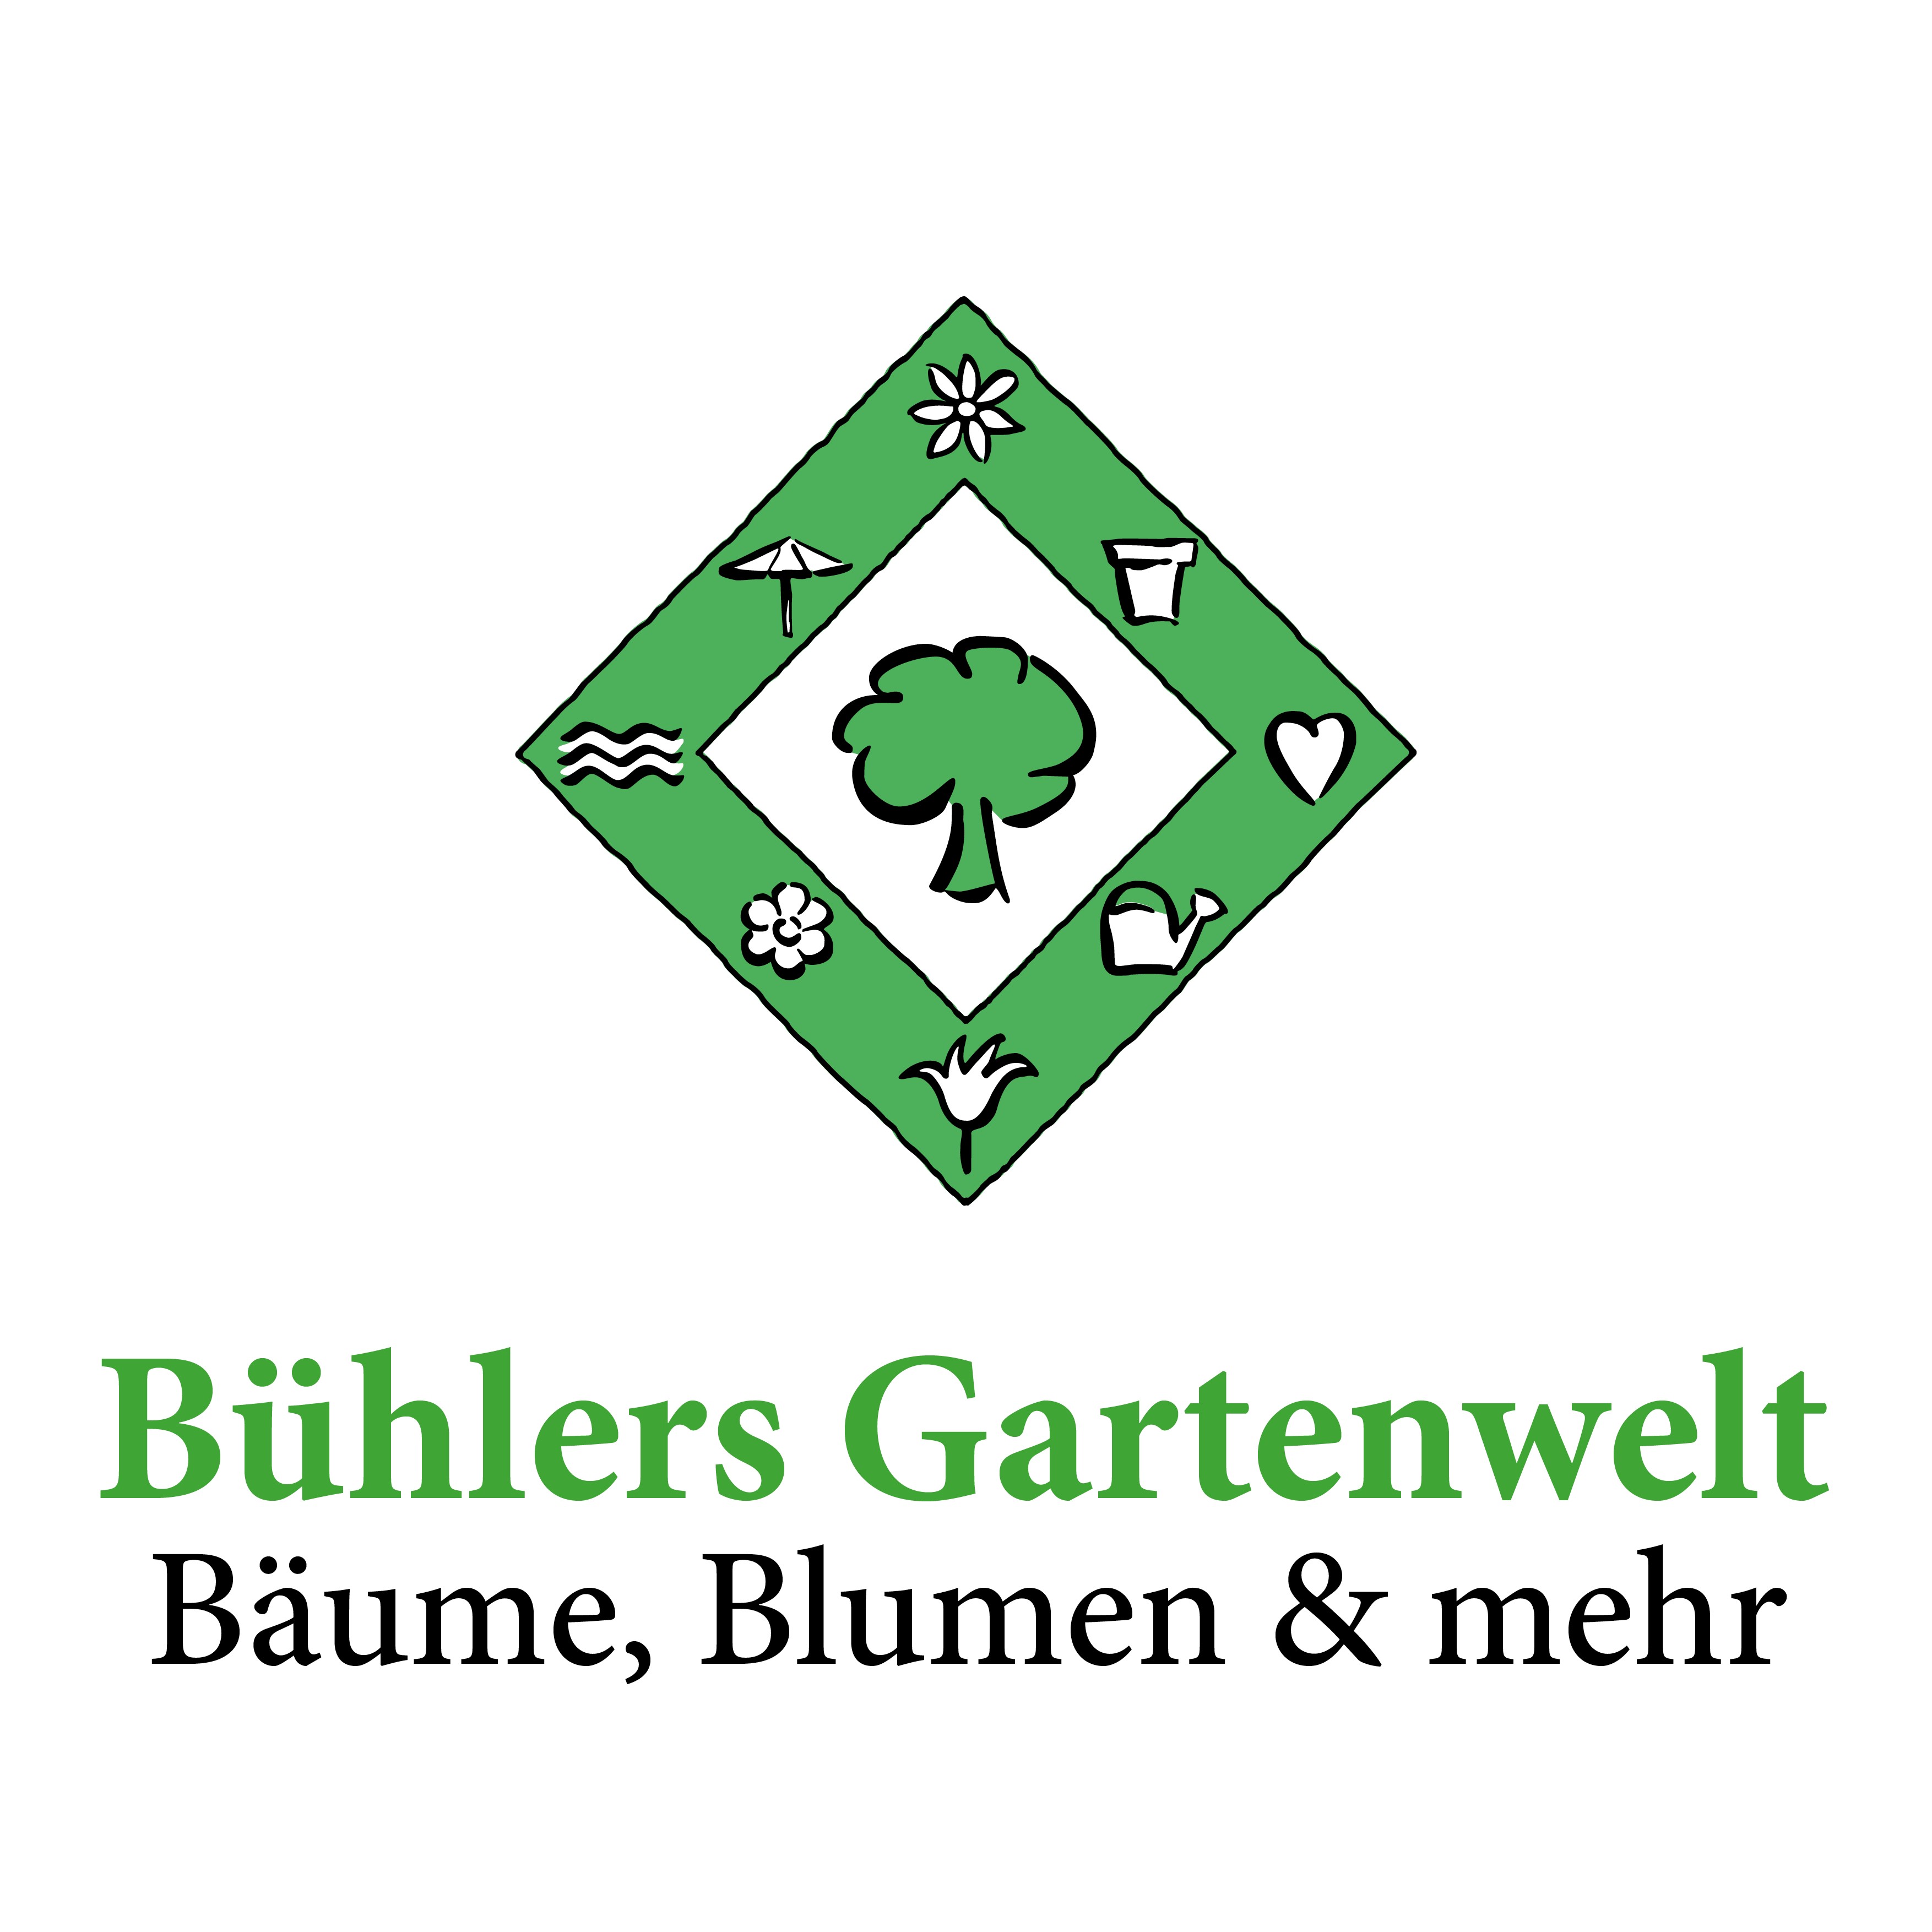 Bühlers Gartenwelt